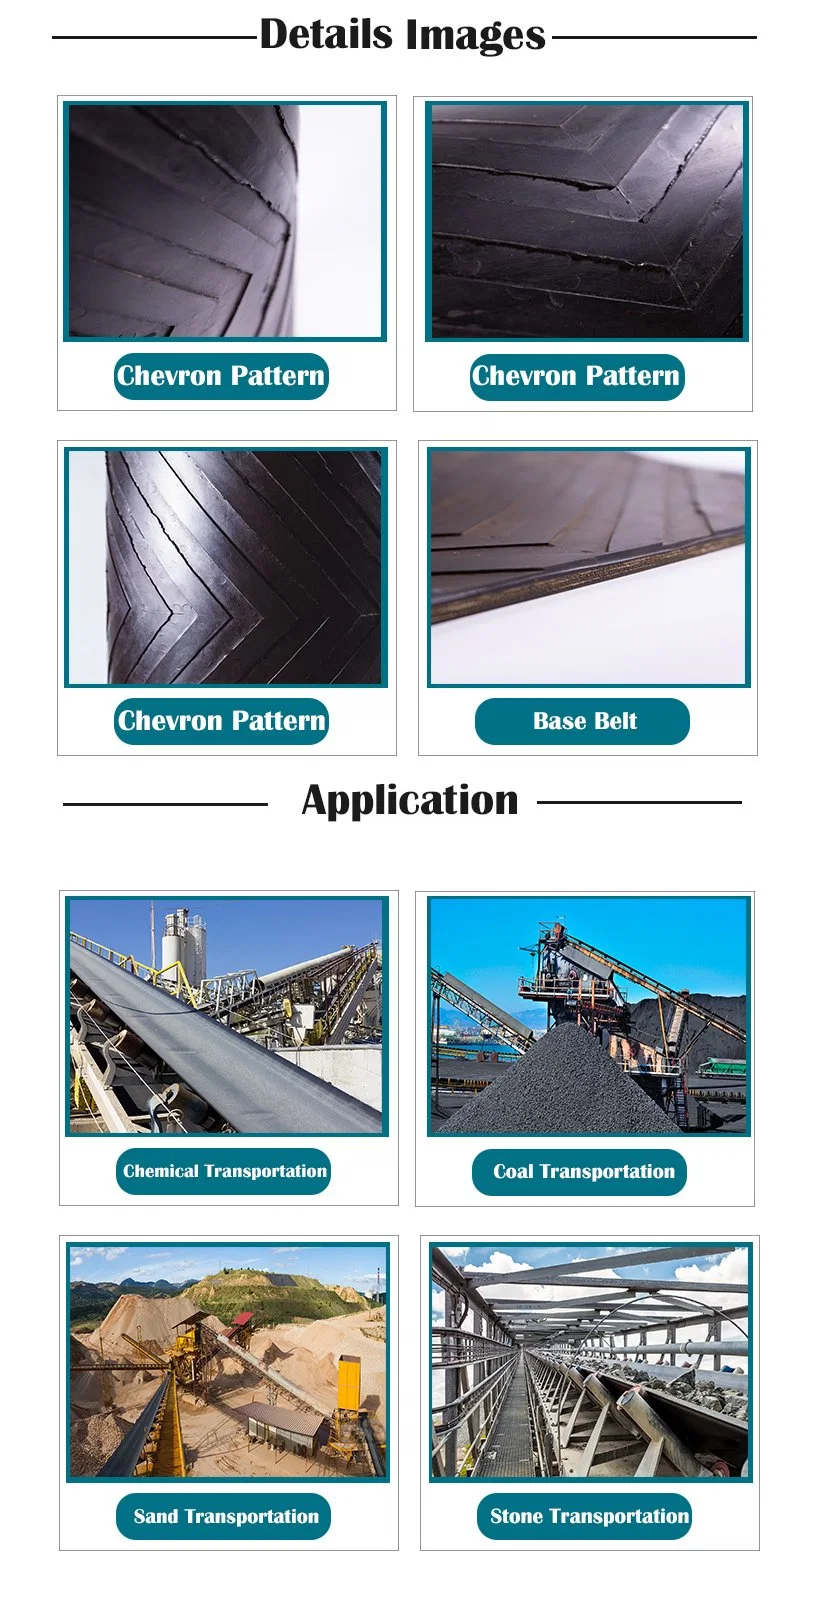 V Type Patterned Industrial Nylon Canvas Chevron Rubber Mining Conveyor Belt